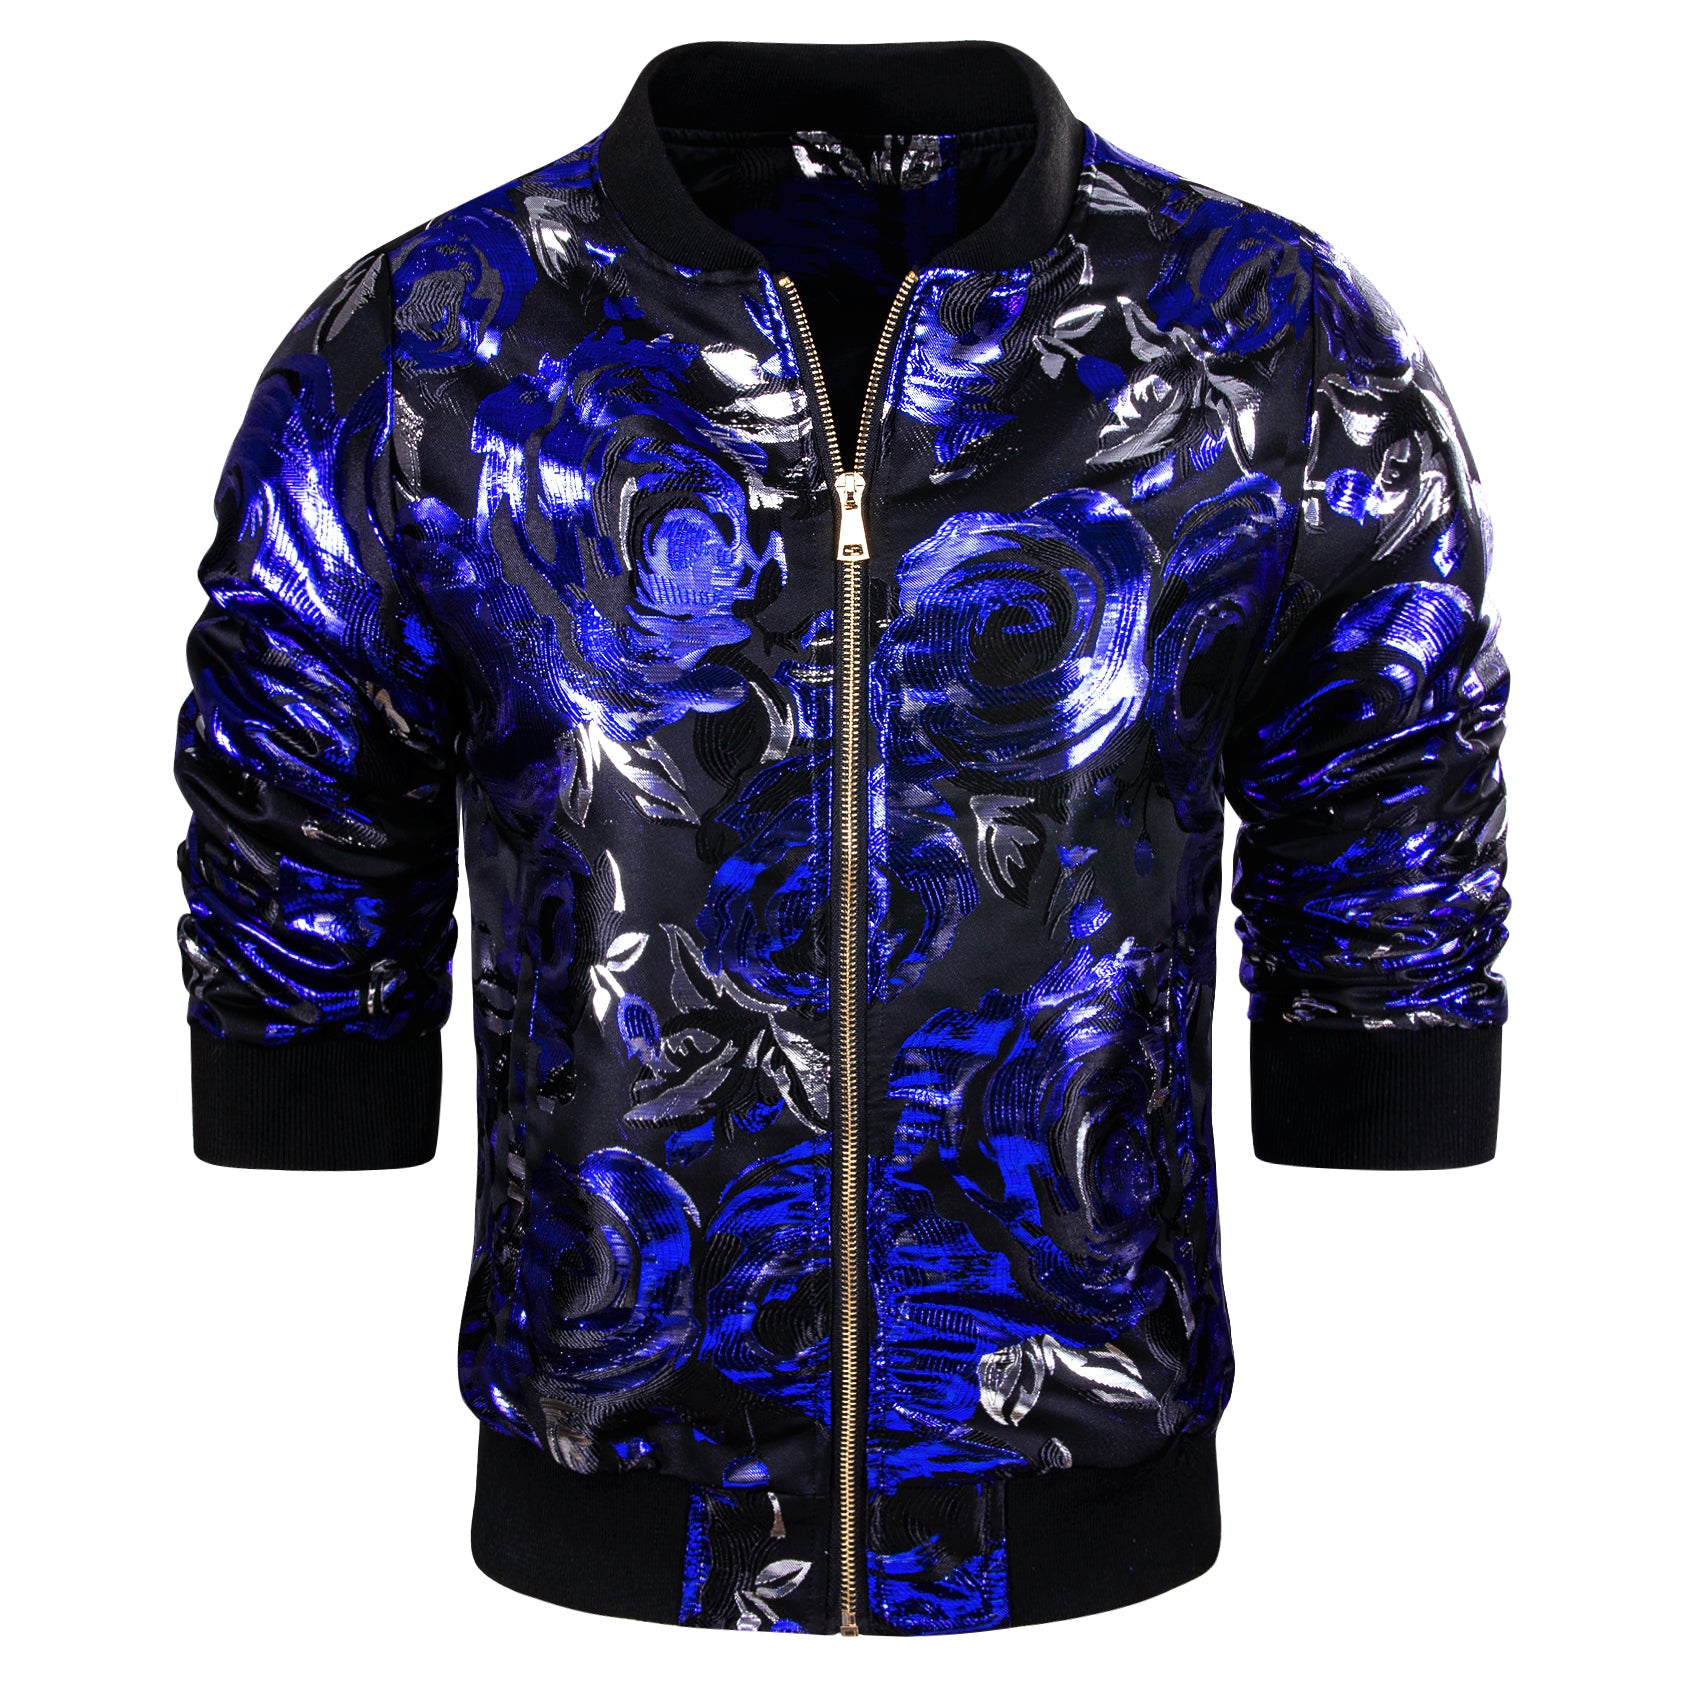 Barry.Wang Zipper Jacket Deep Blue Black Floral Jacquard Paisley Jacket for Men